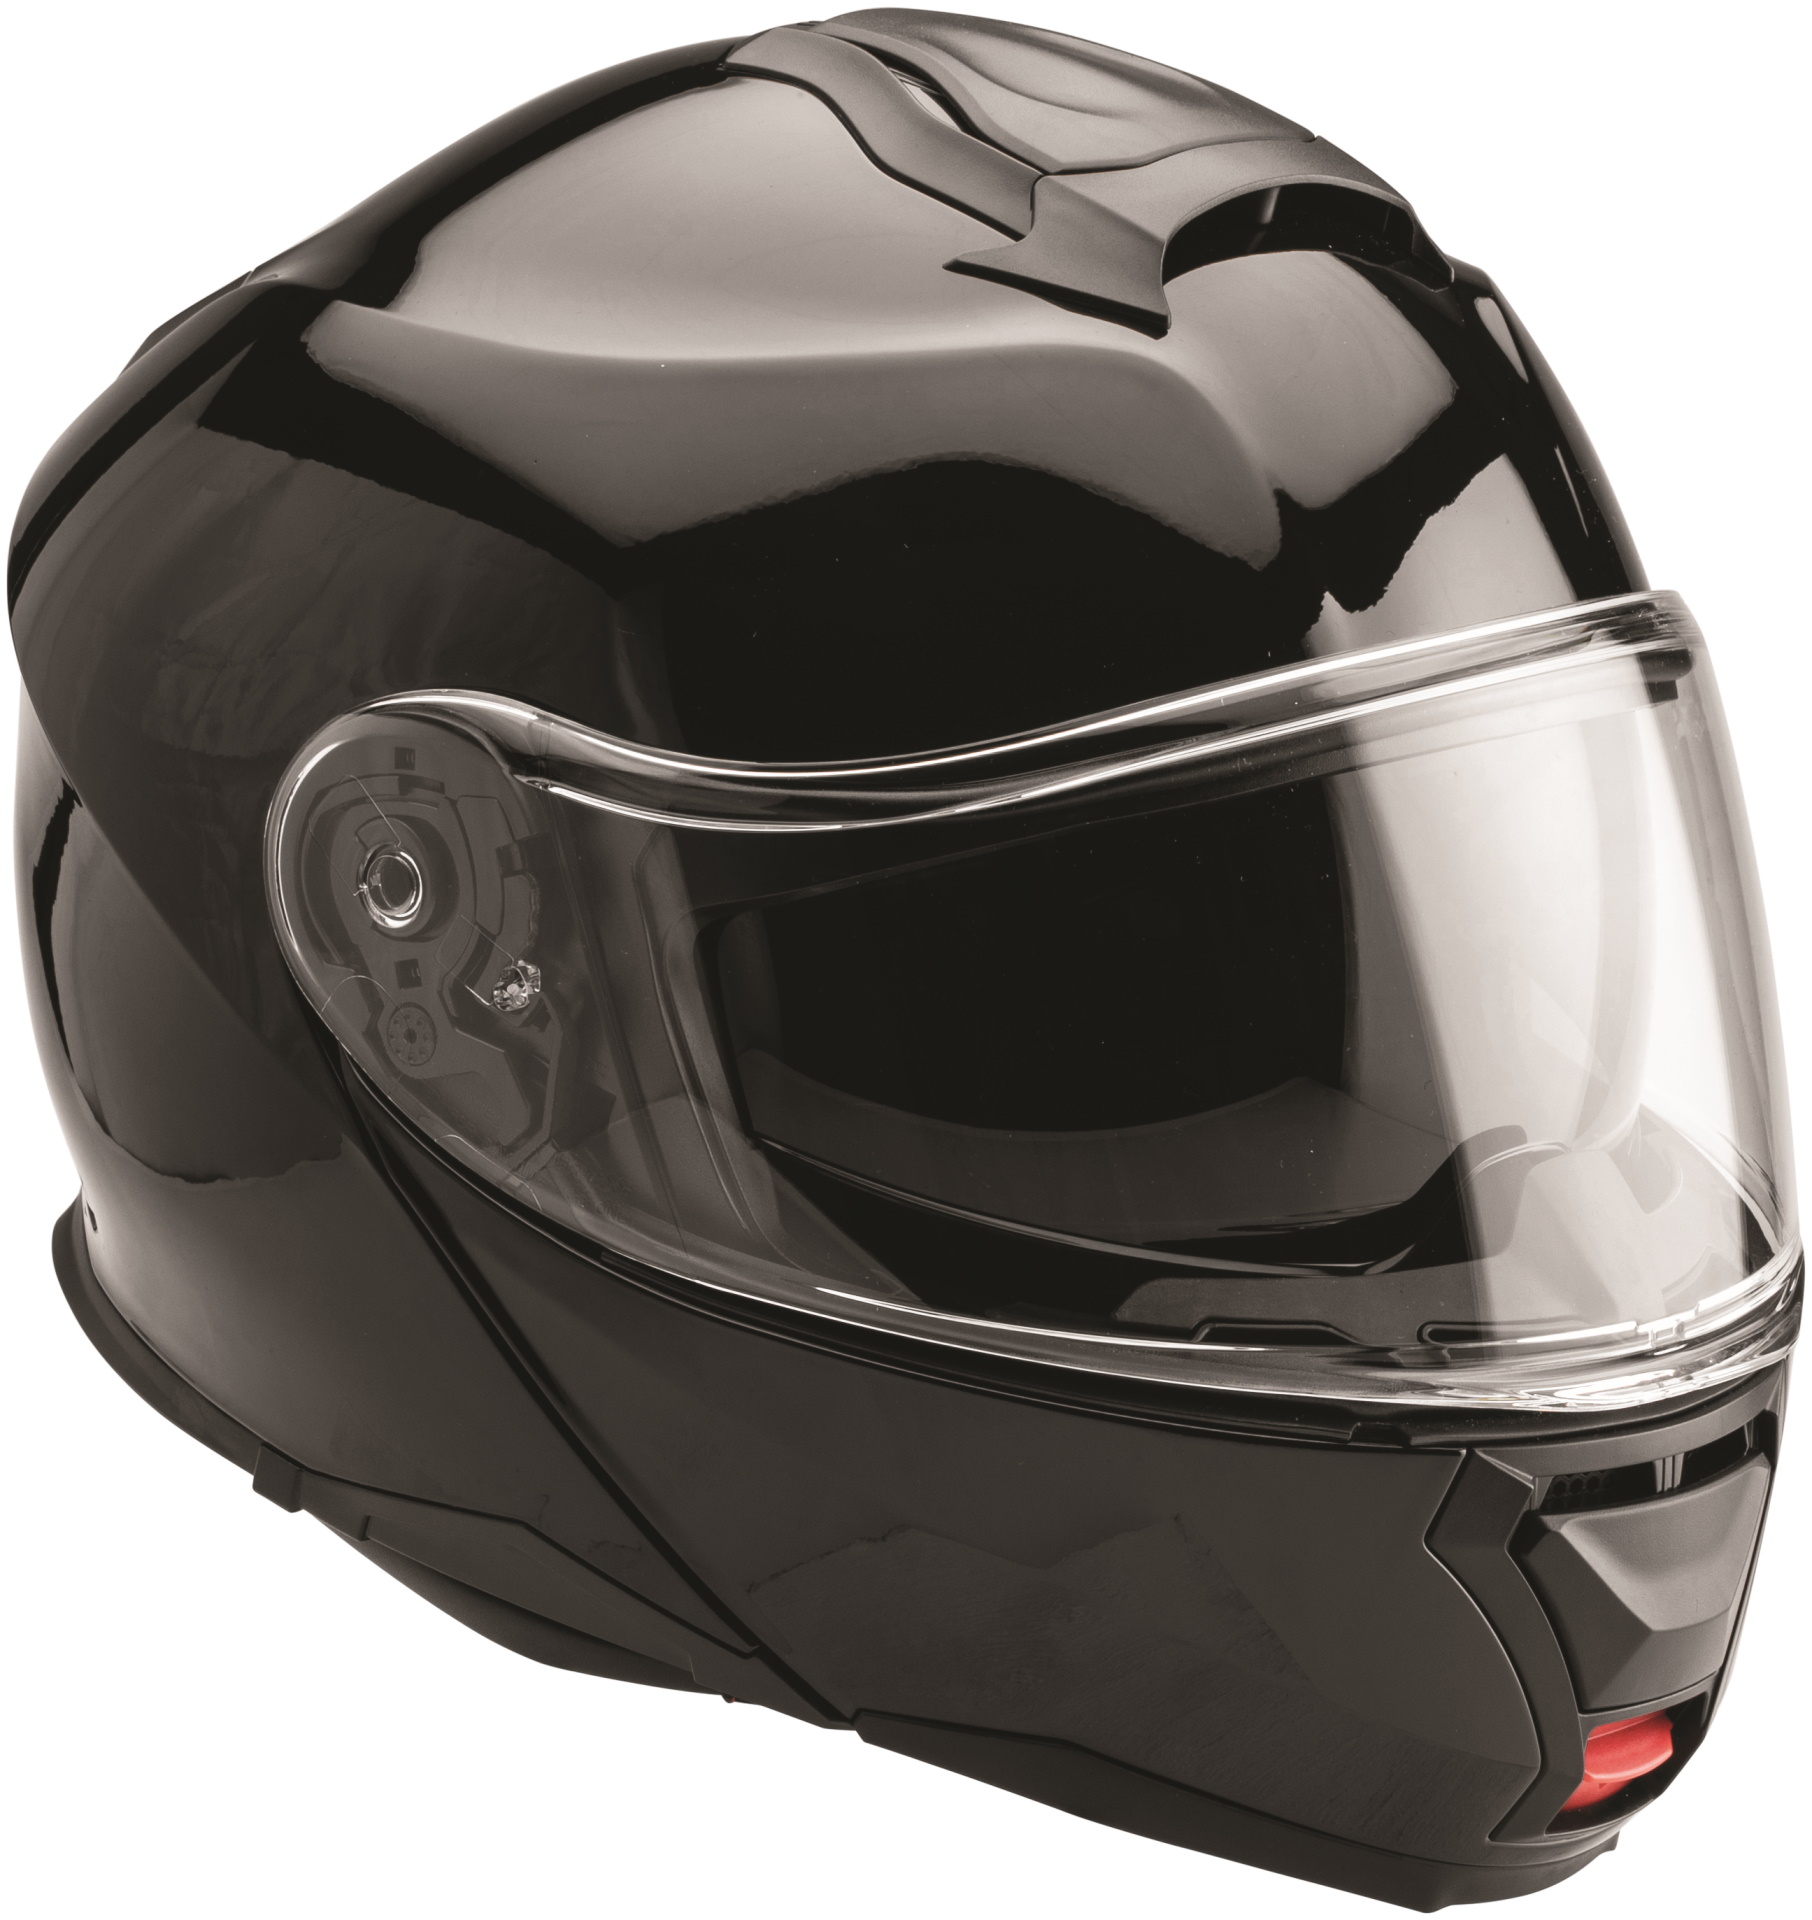 Vulcan Modular Helmet | Modular Helmets | Premium Motorcycle Clothing & Gear For Men and Women